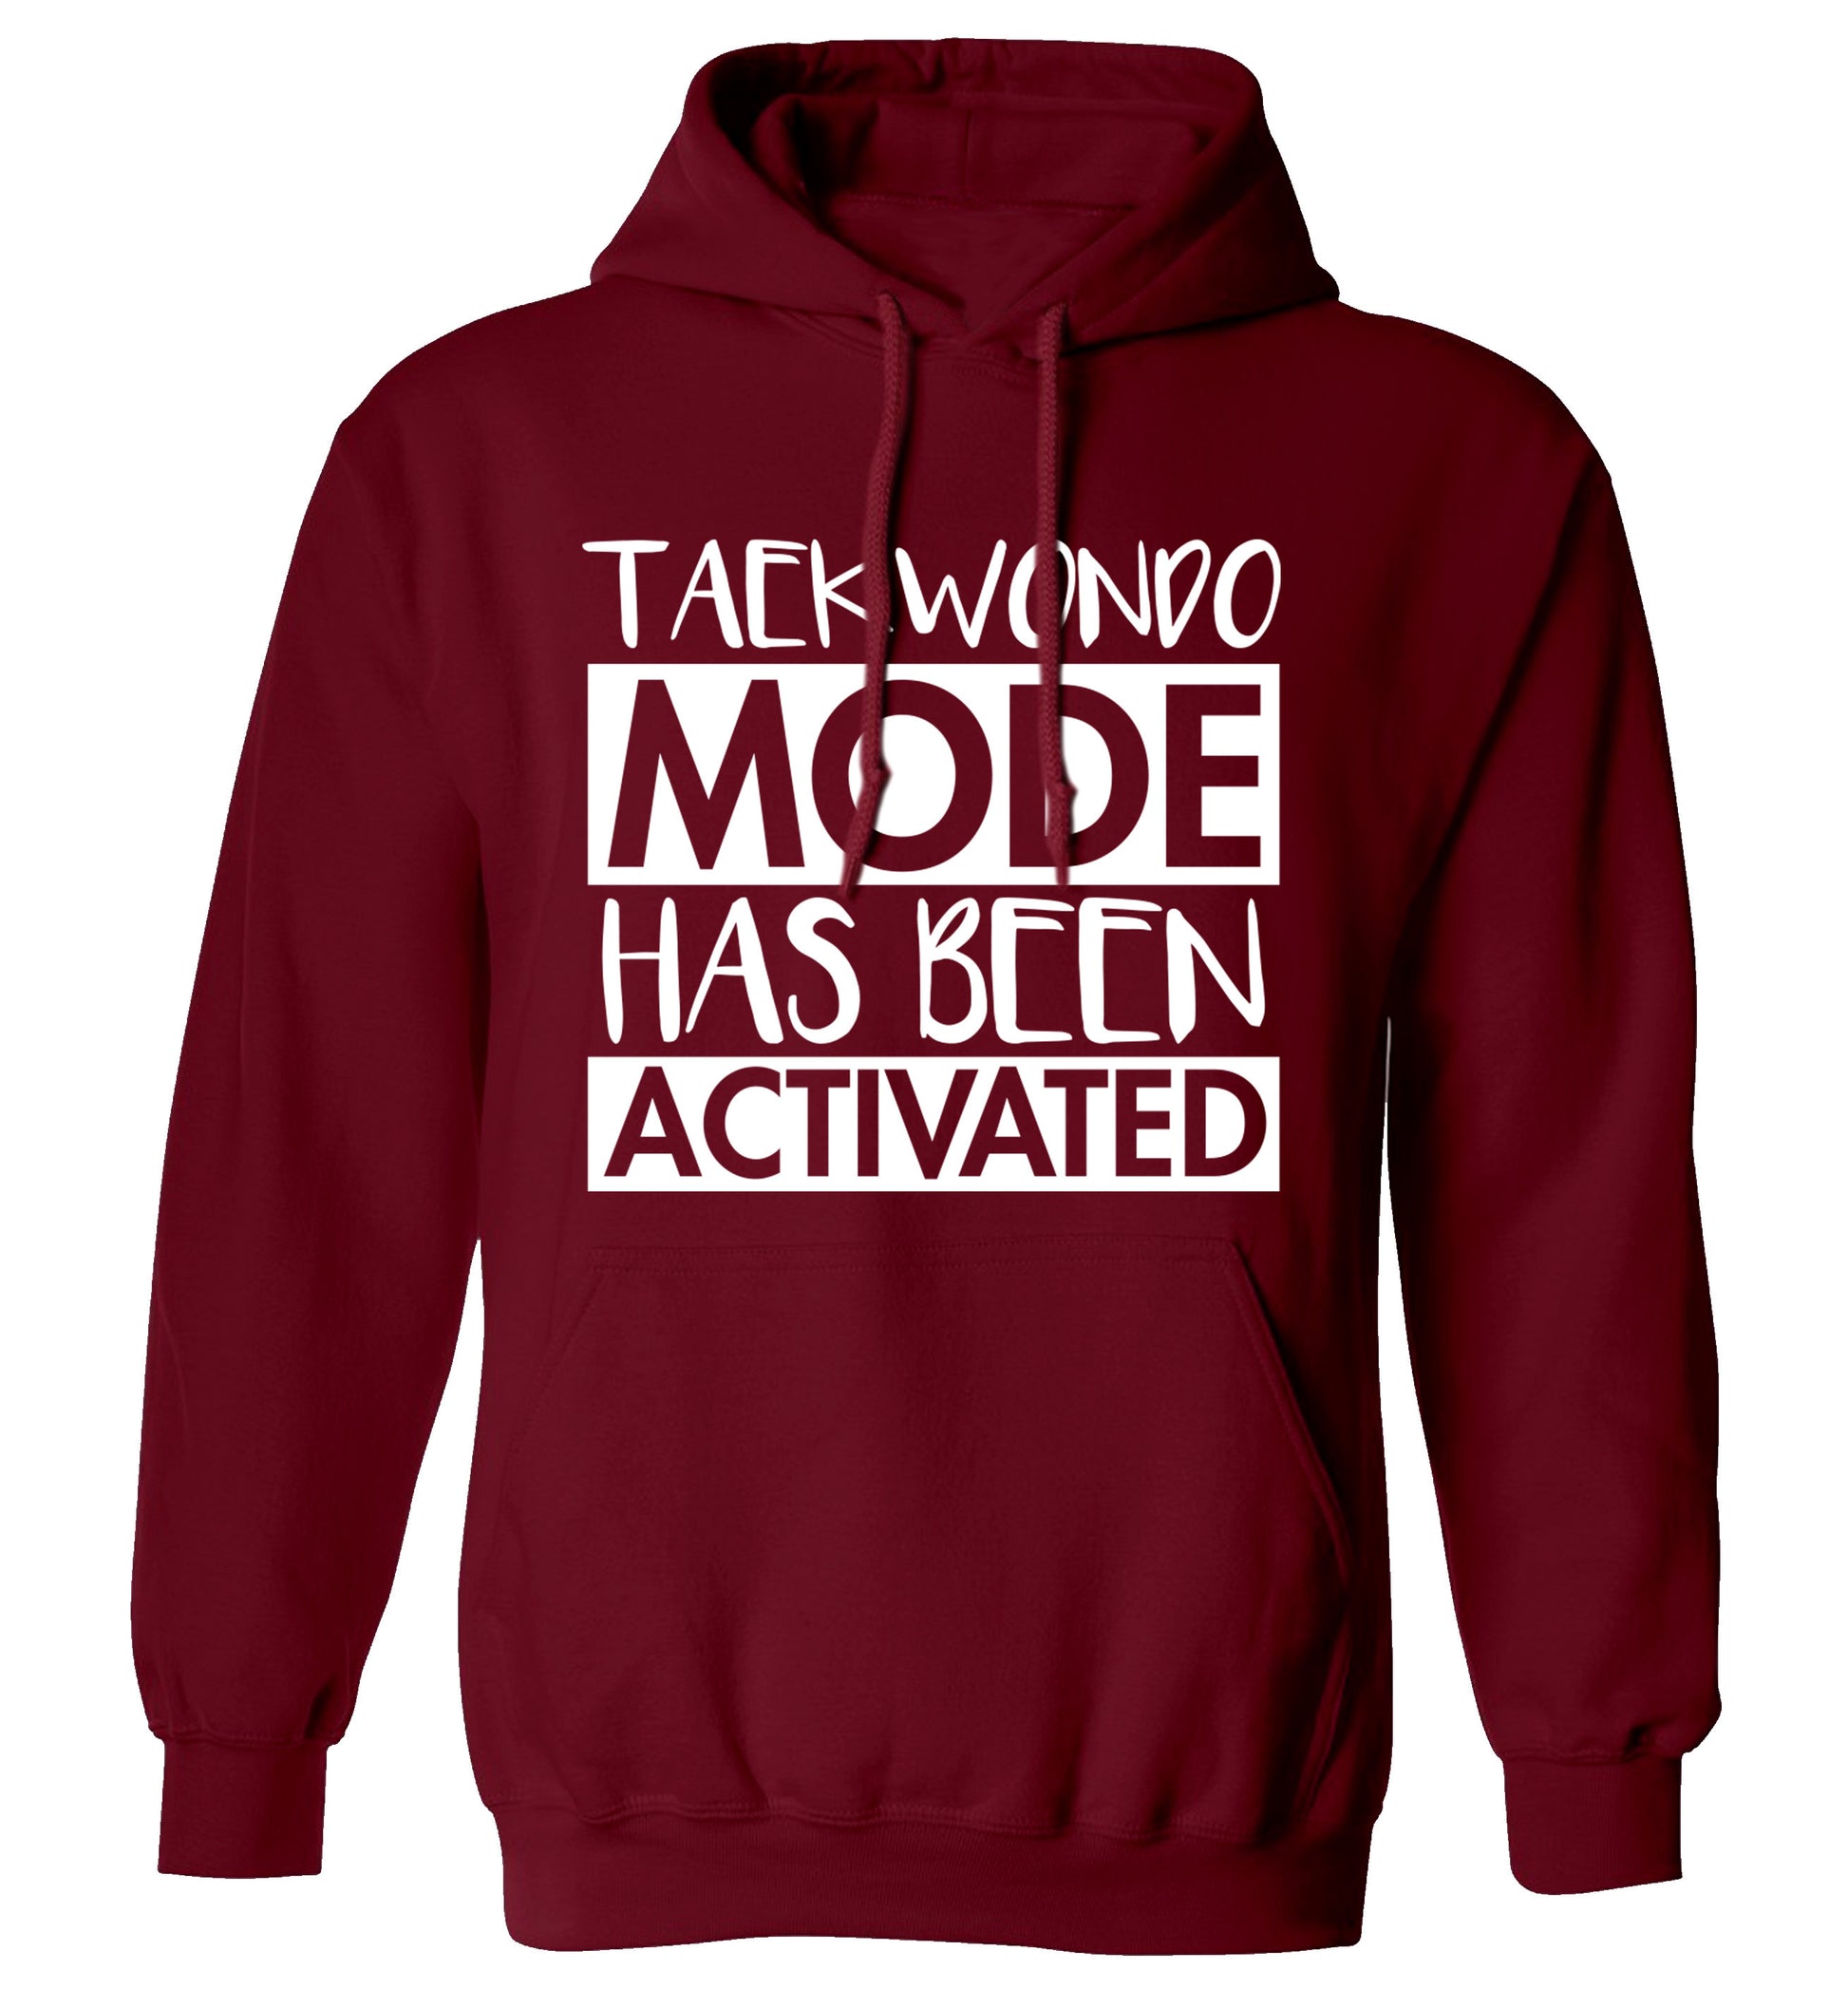 Taekwondo mode activated adults unisex maroon hoodie 2XL